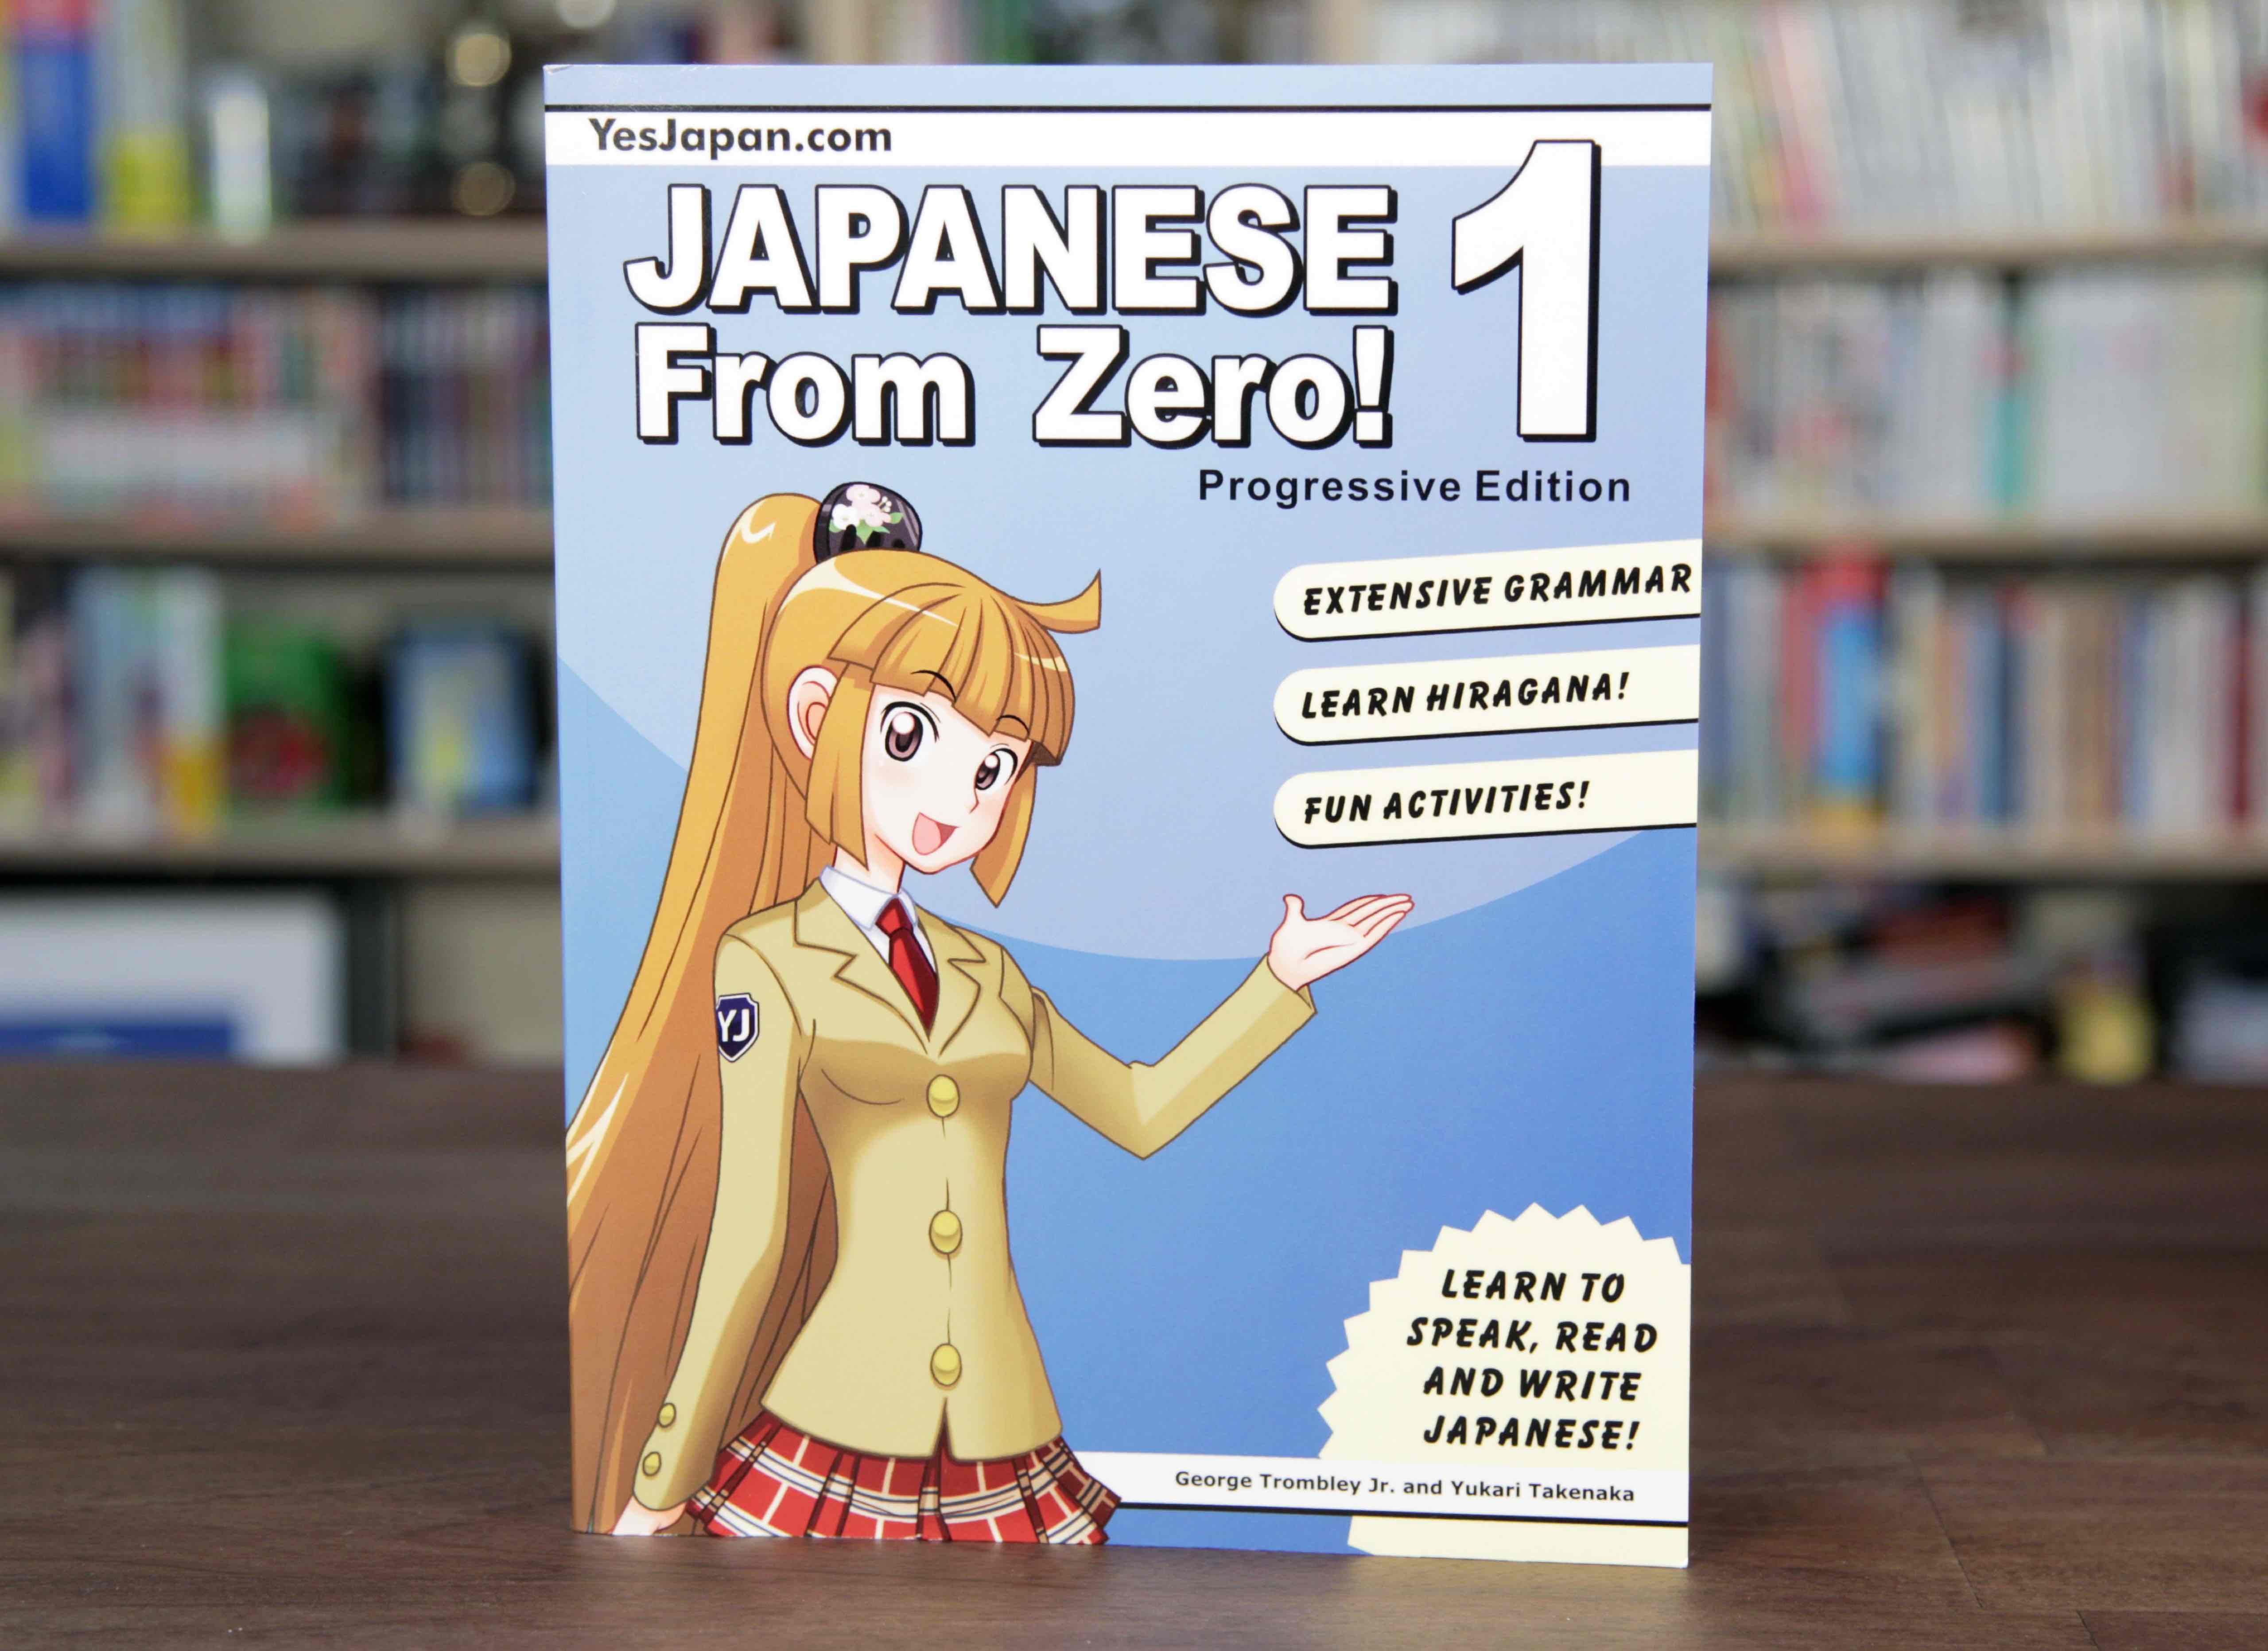 Japanese from Zero! 1: Progressive Edition - The Tofugu Review